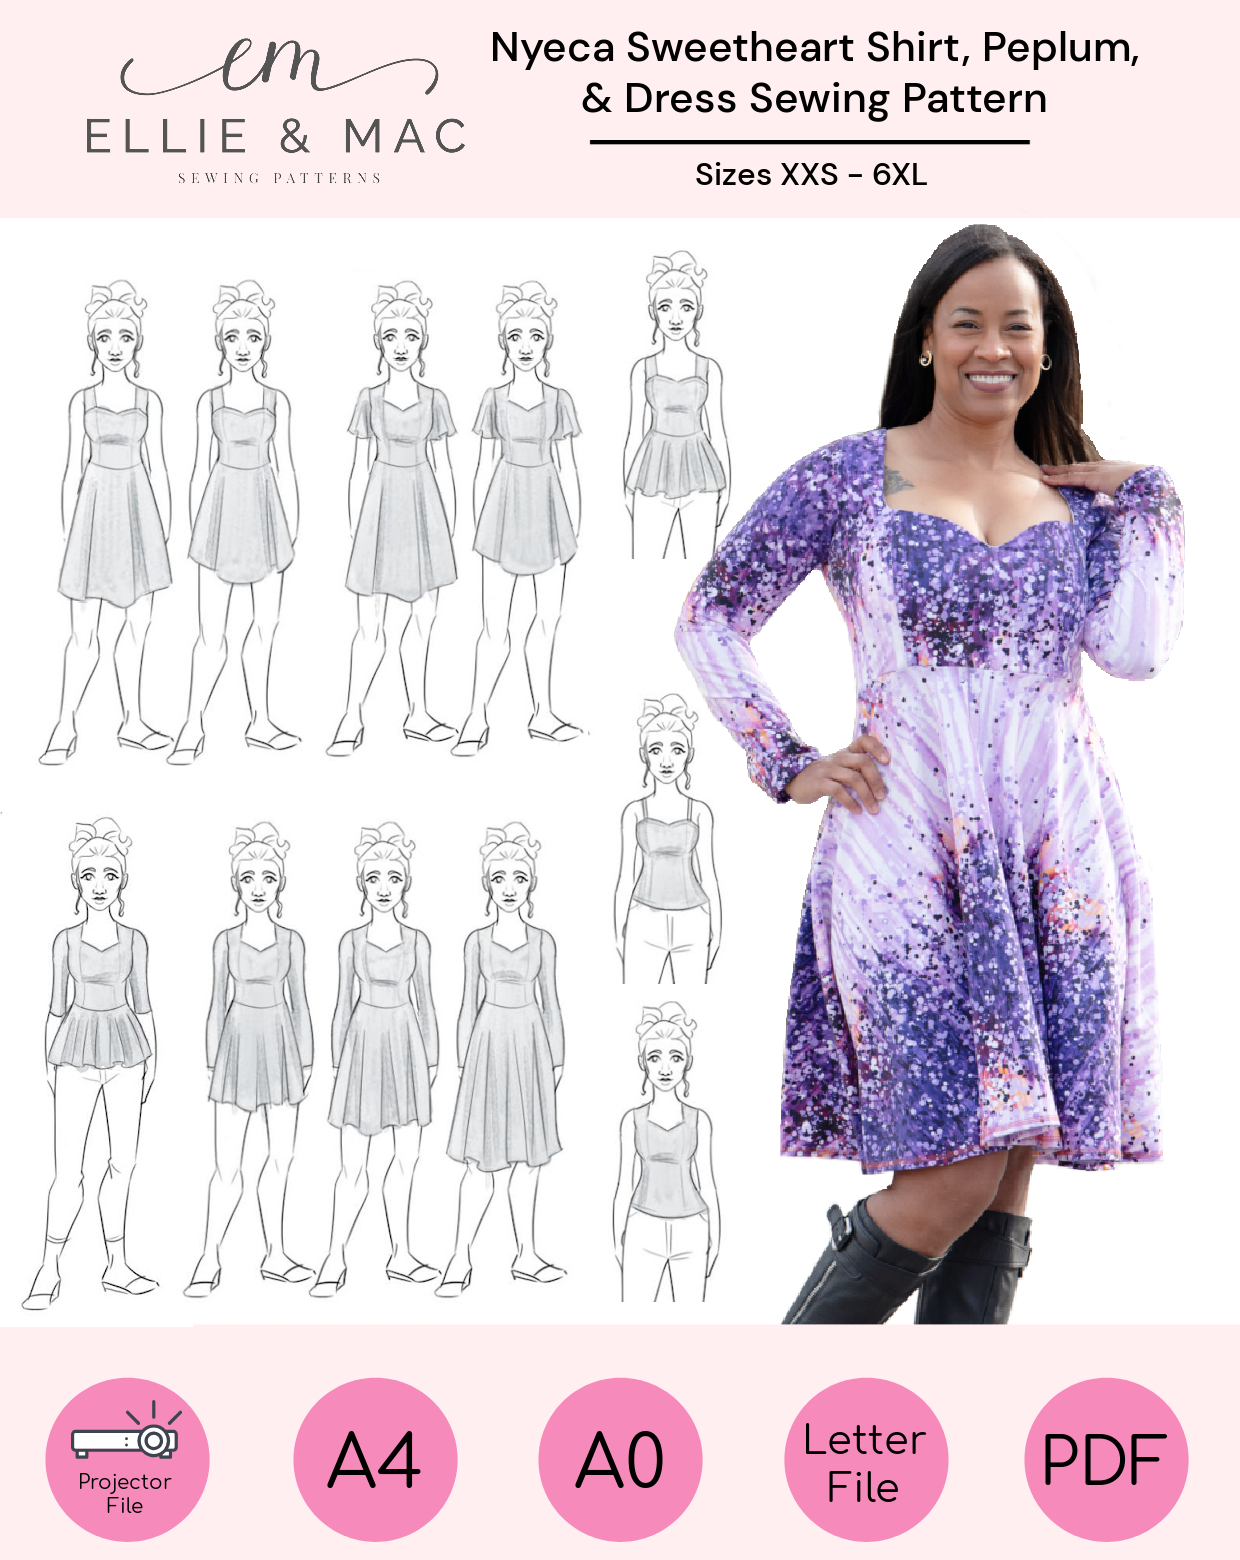 Beautiful Princess Seam Dress Pattern Free Download PDF.